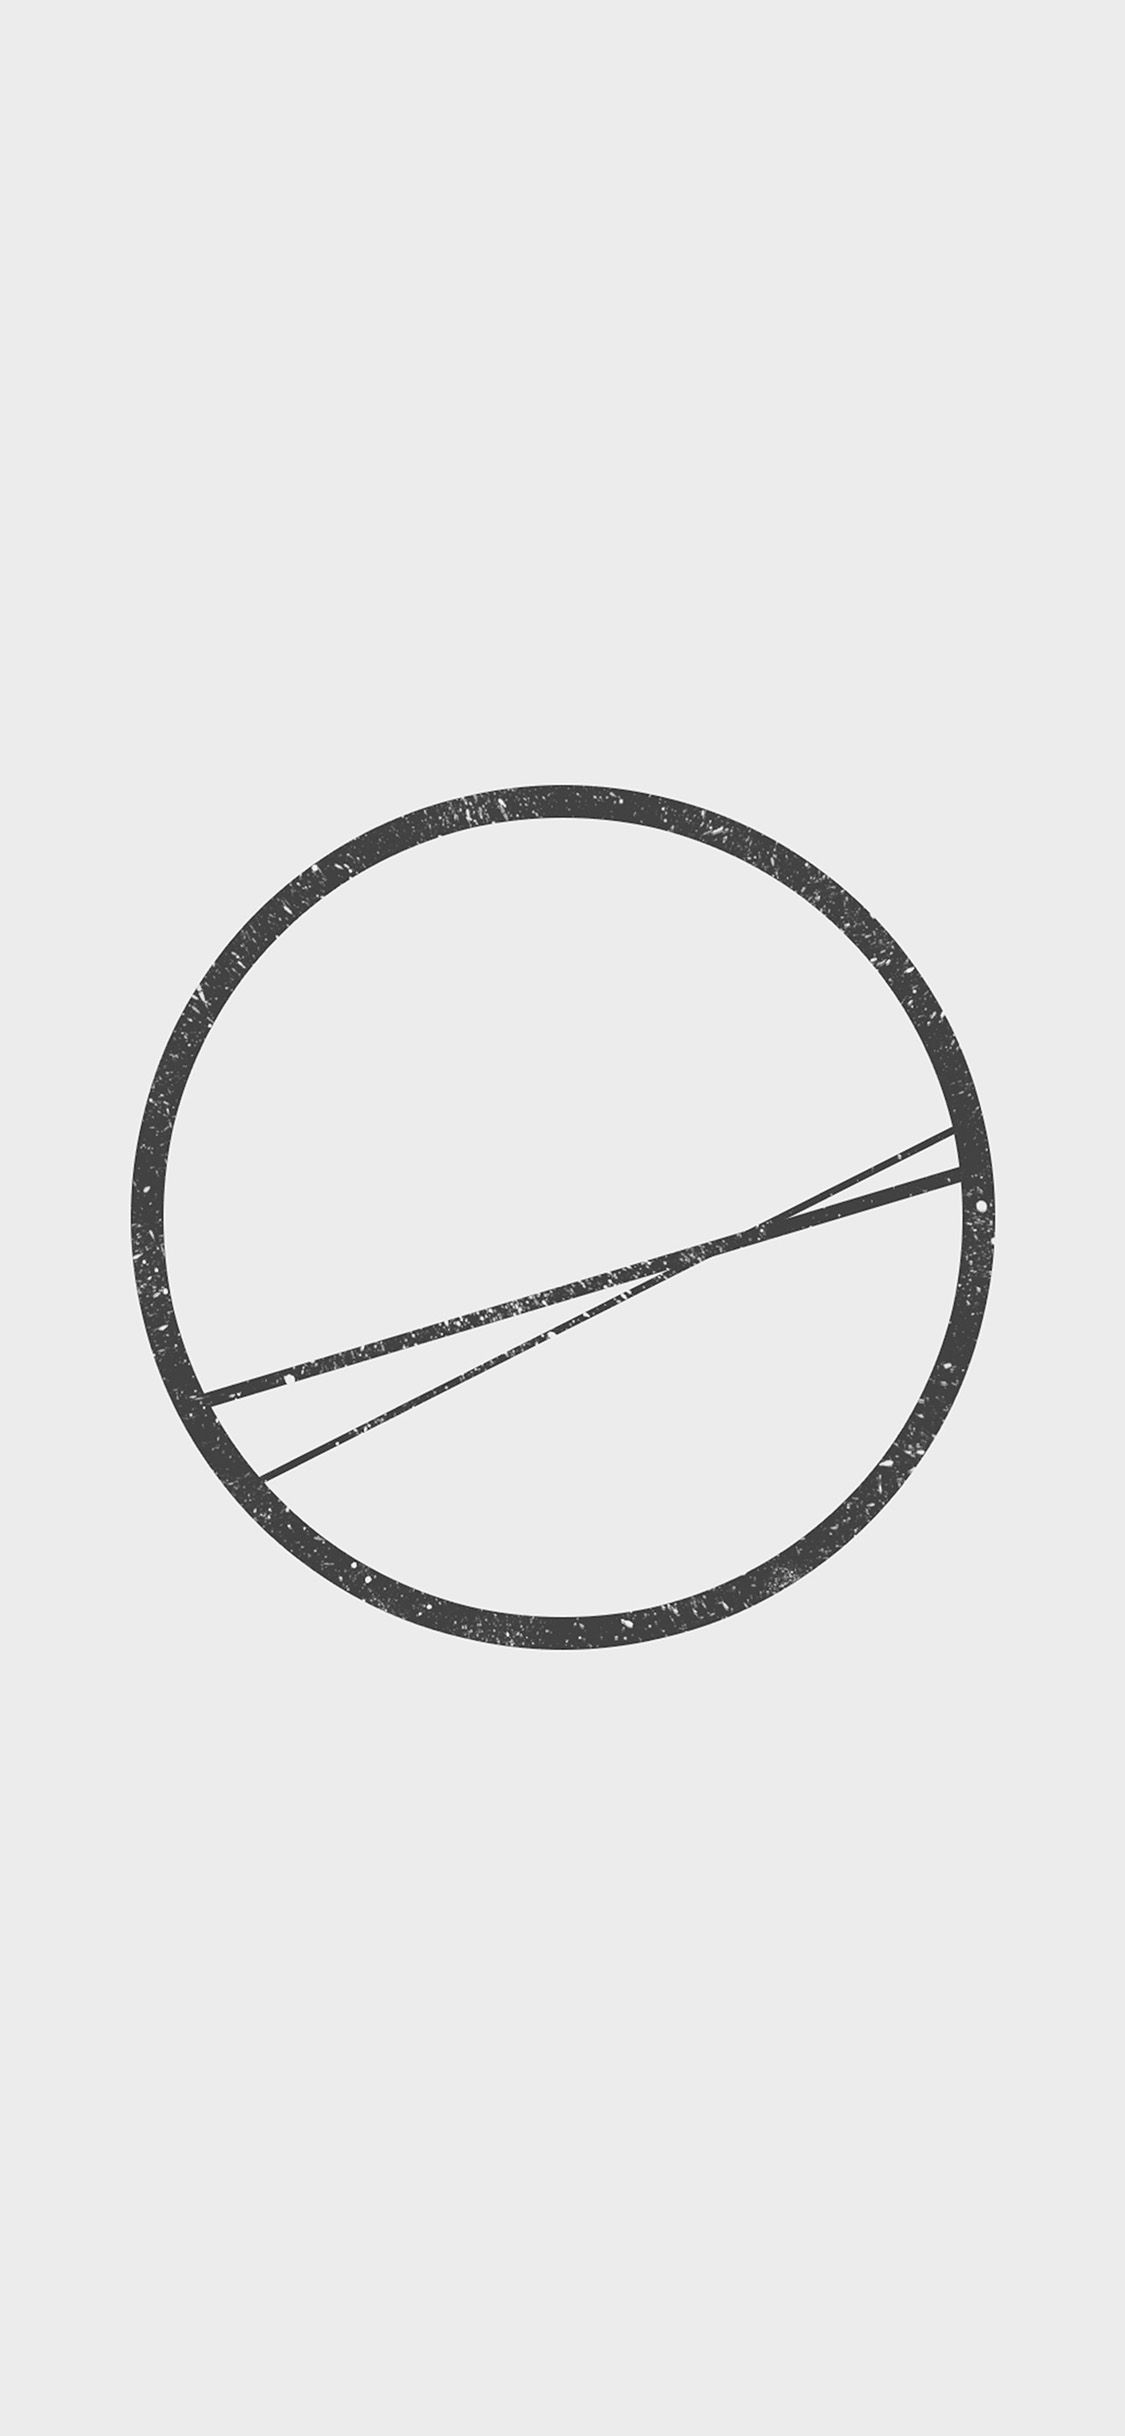 iPhone X wallpaper. minimal simple circle art illustration white